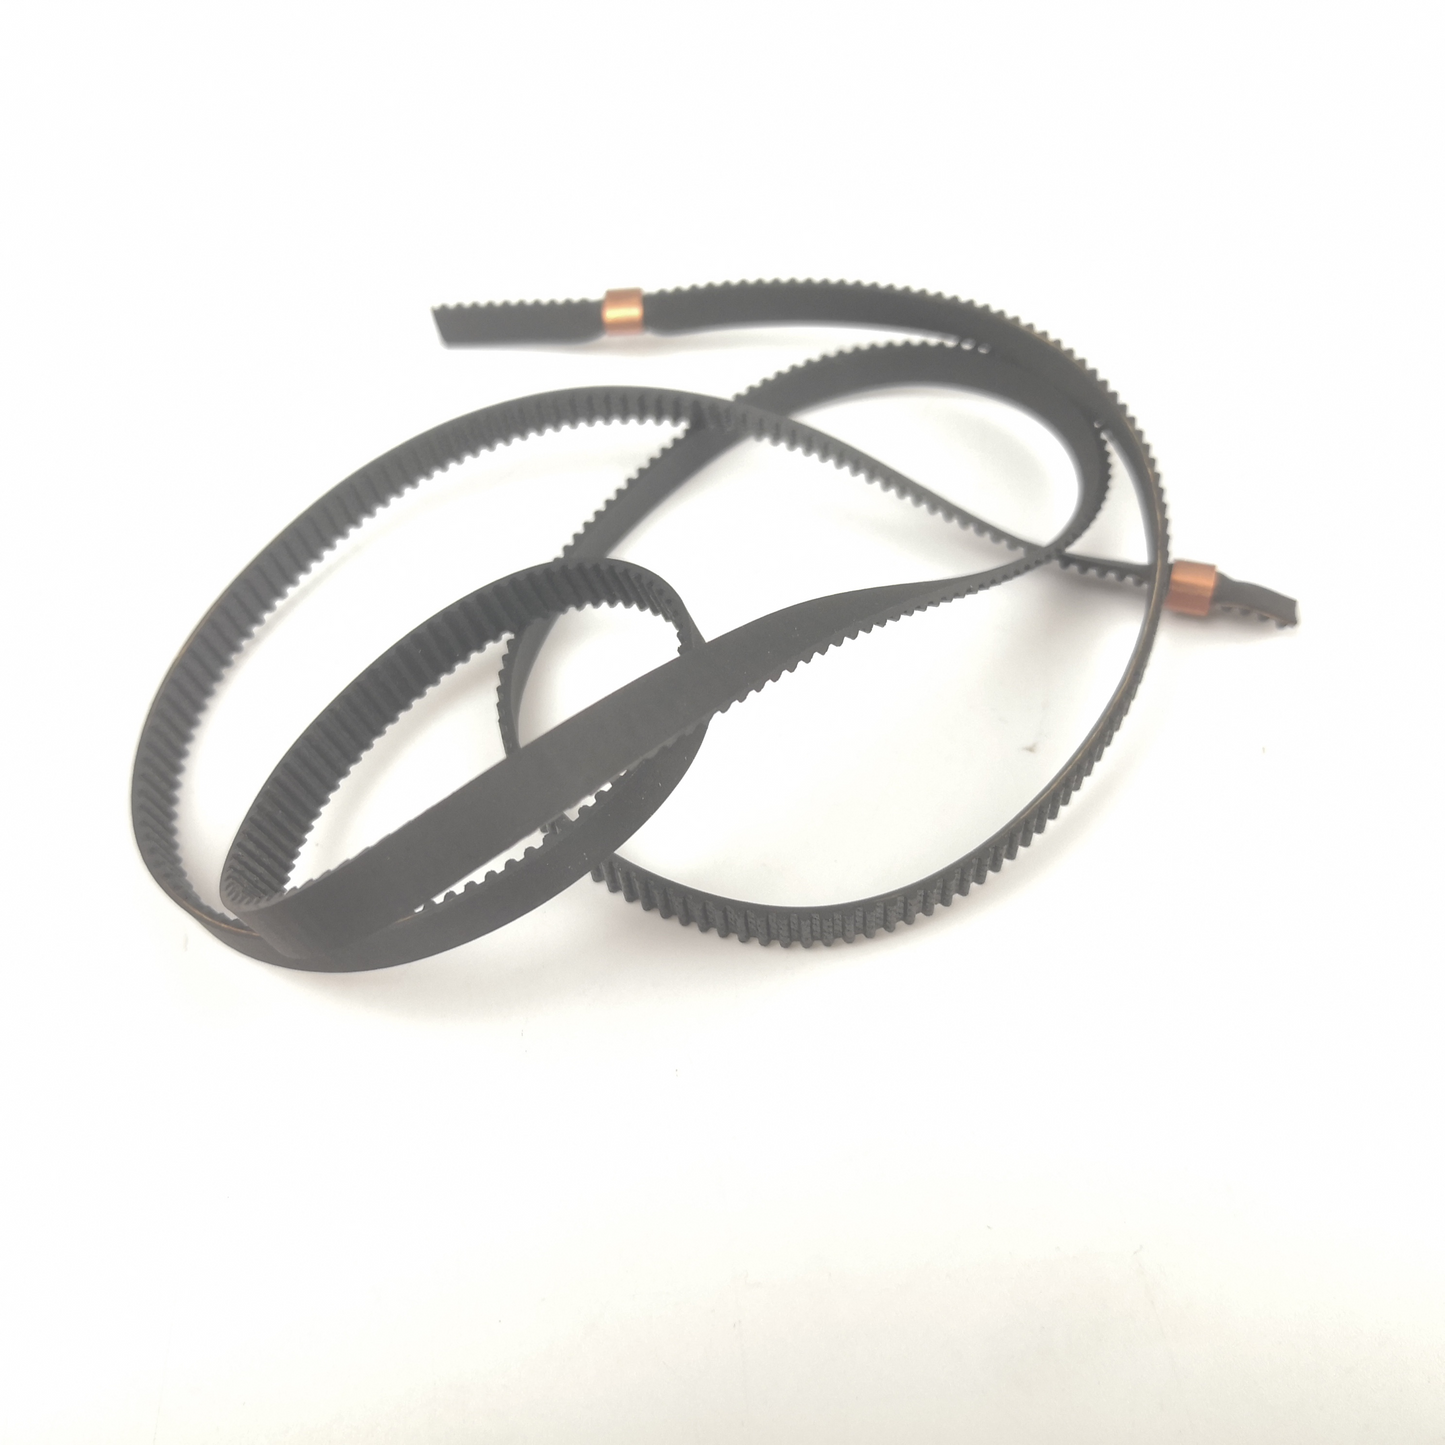 D12-230 2gt-6 synchronous belt, x-belt copper ring for shipment